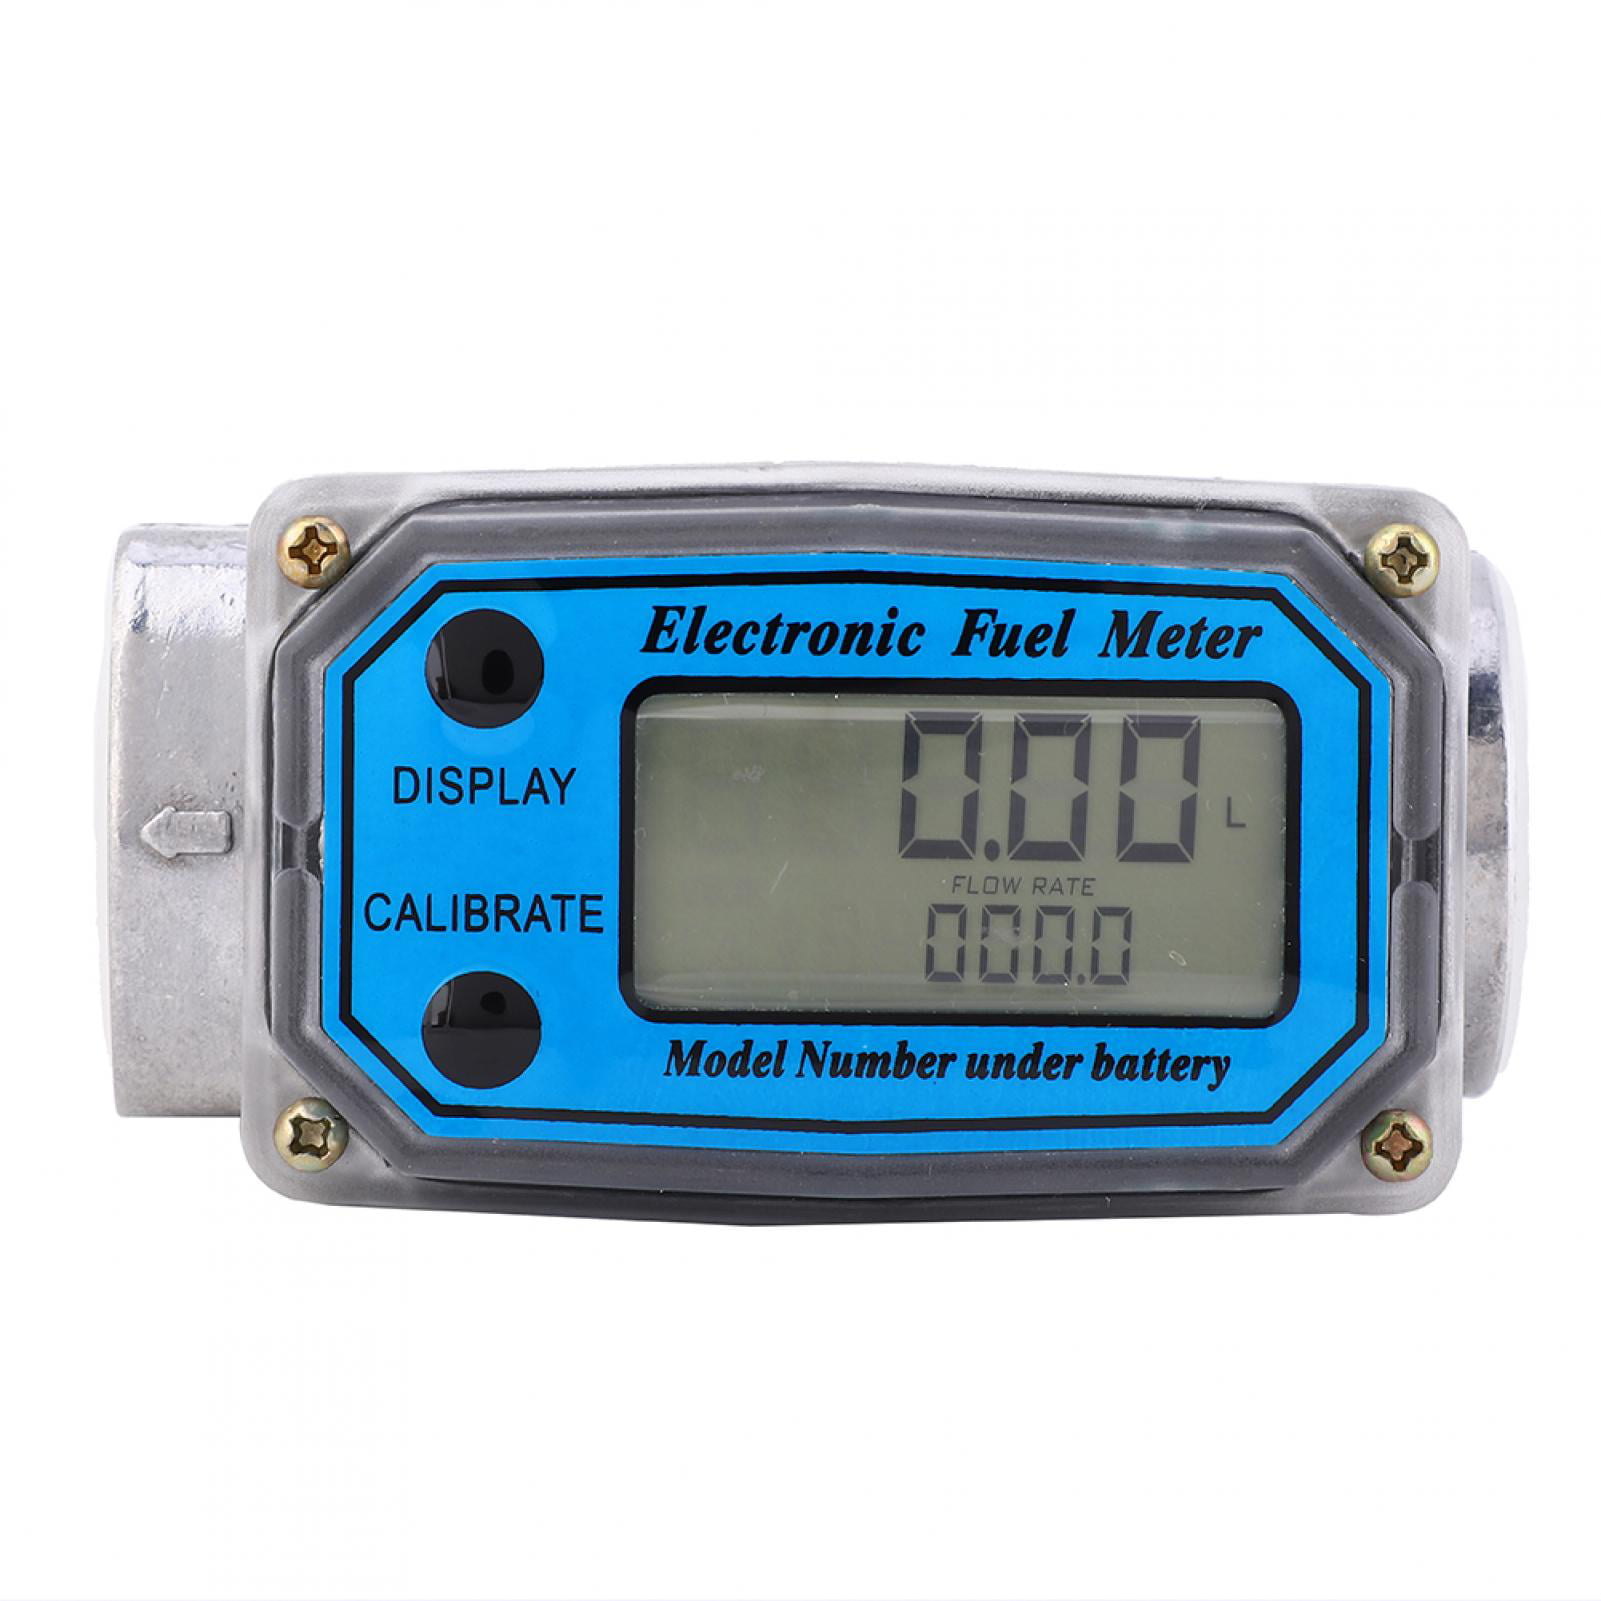 Digital High Accuracy Fuel Flowmeter LCD Display For Gasoline Oil Measure Tool 